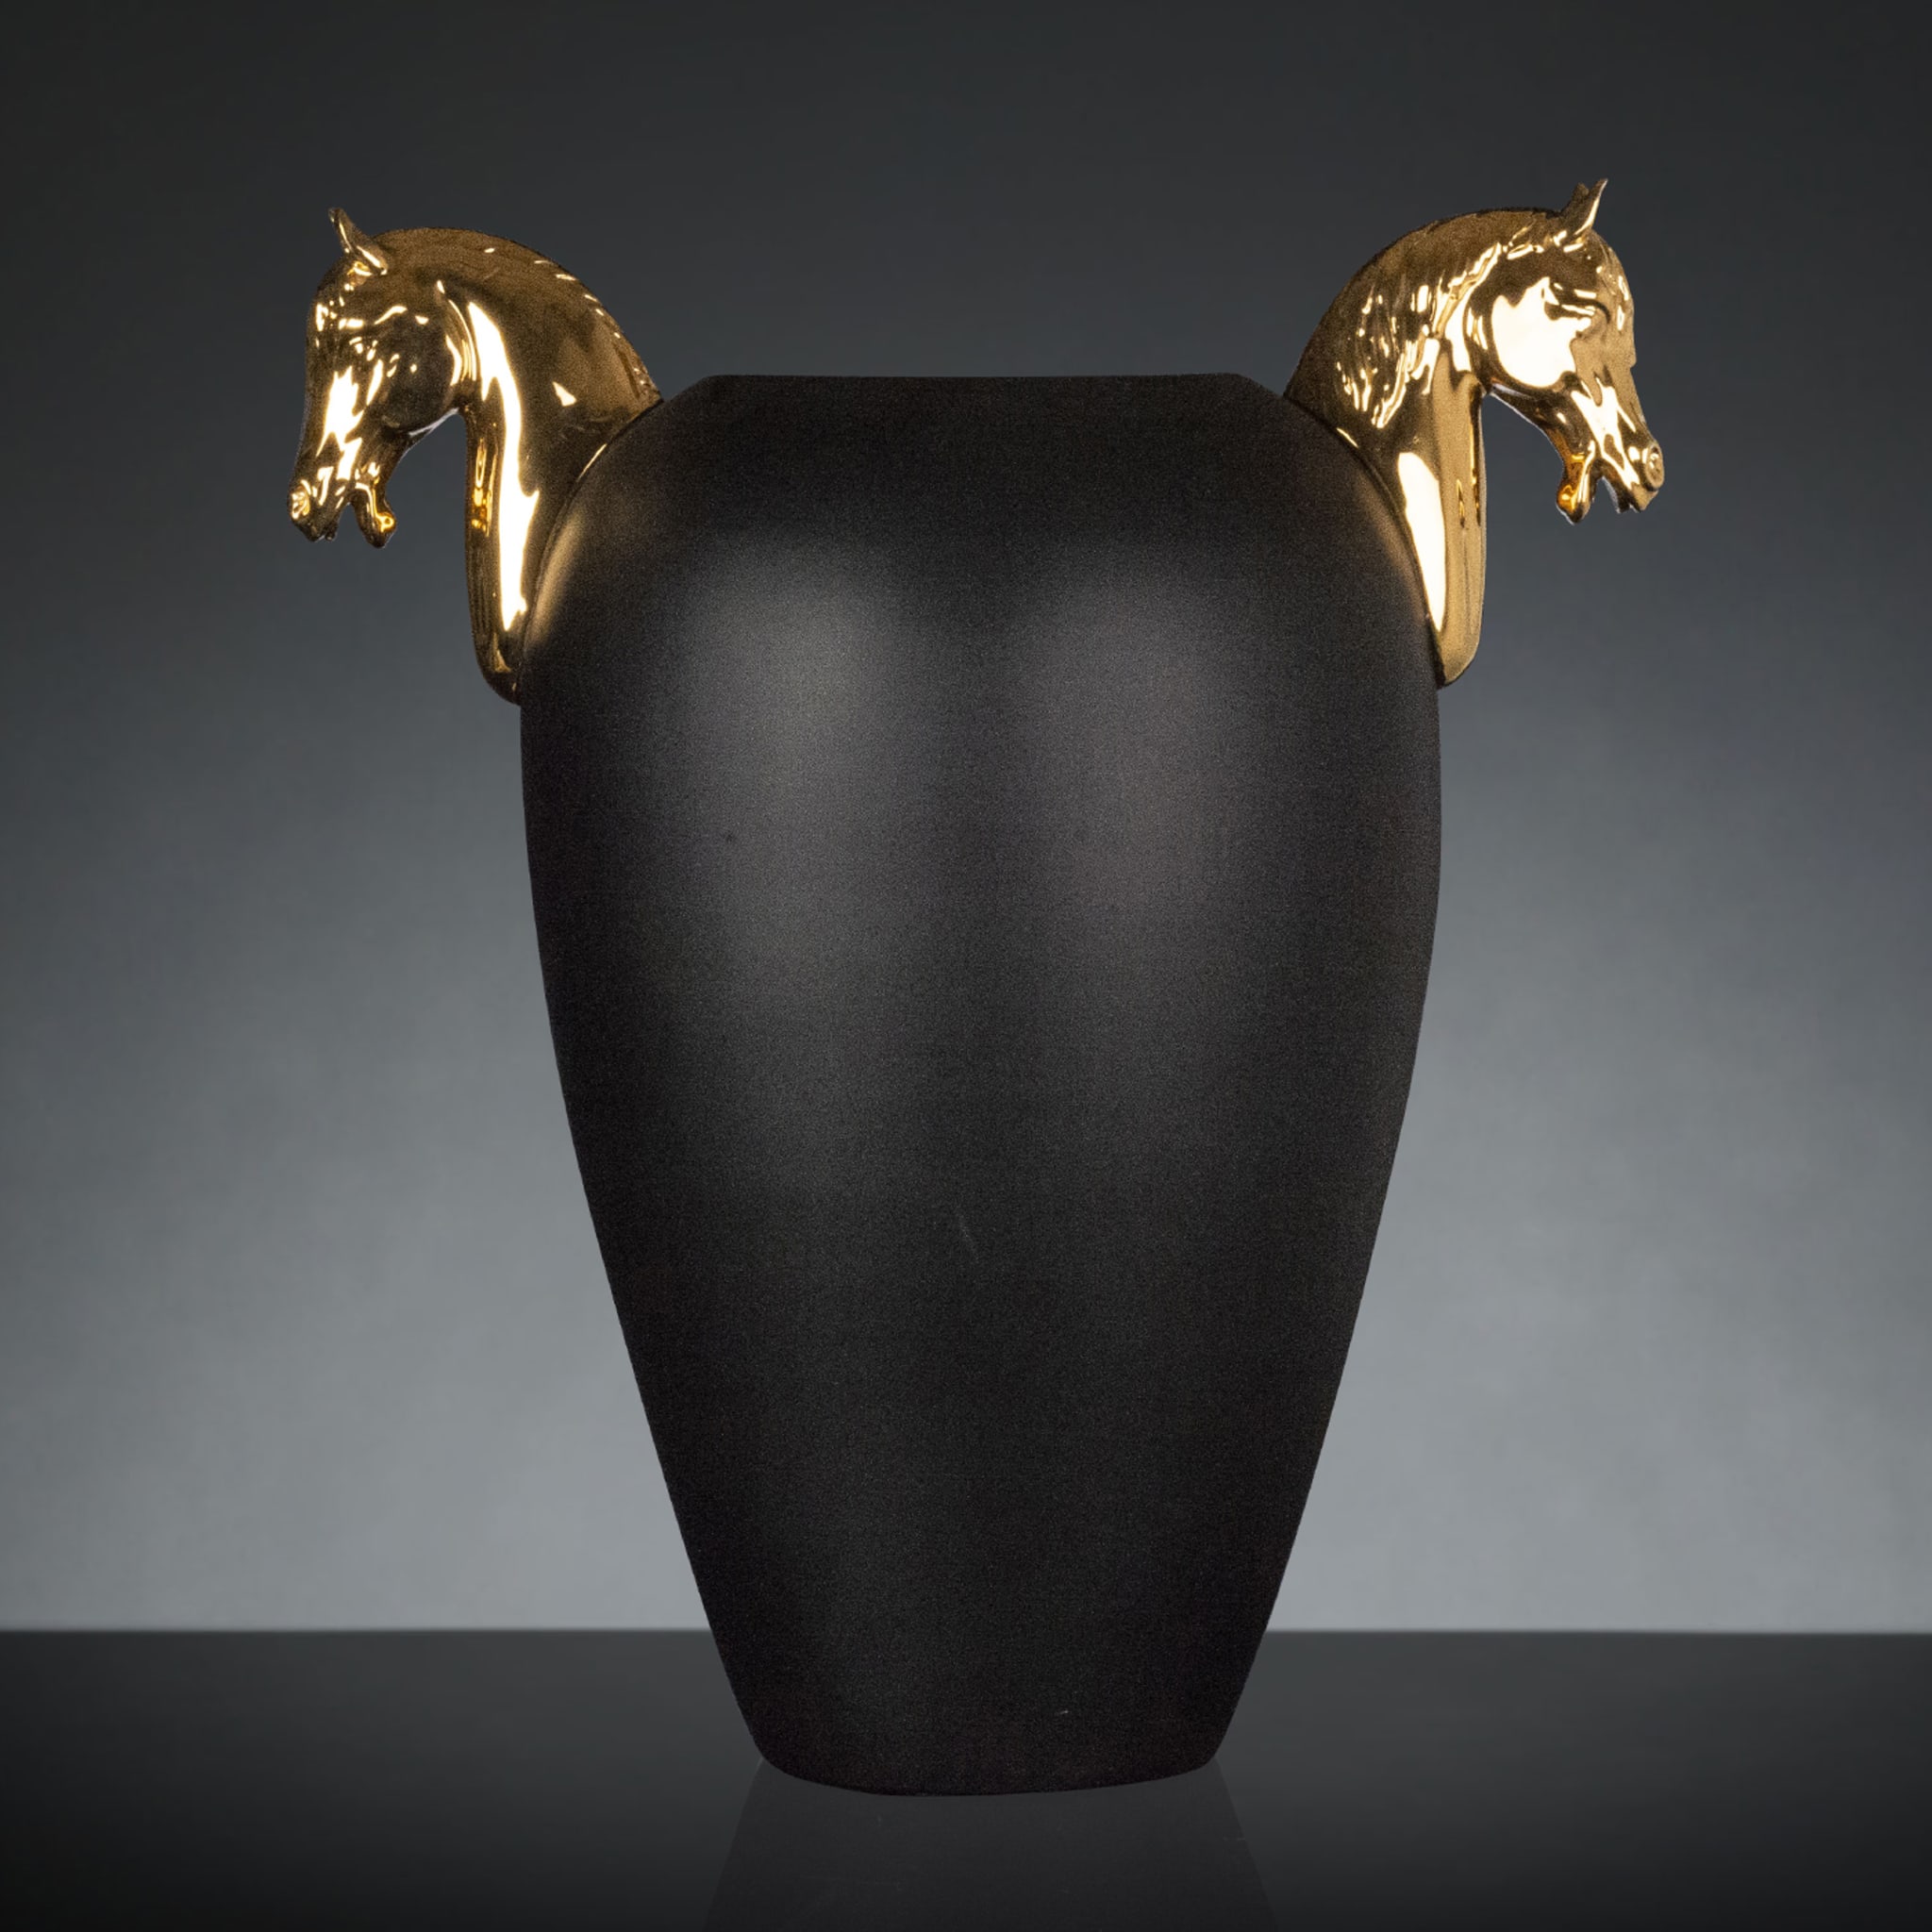 Grand vase noir et or brillant en forme de cheval - Vue alternative 4